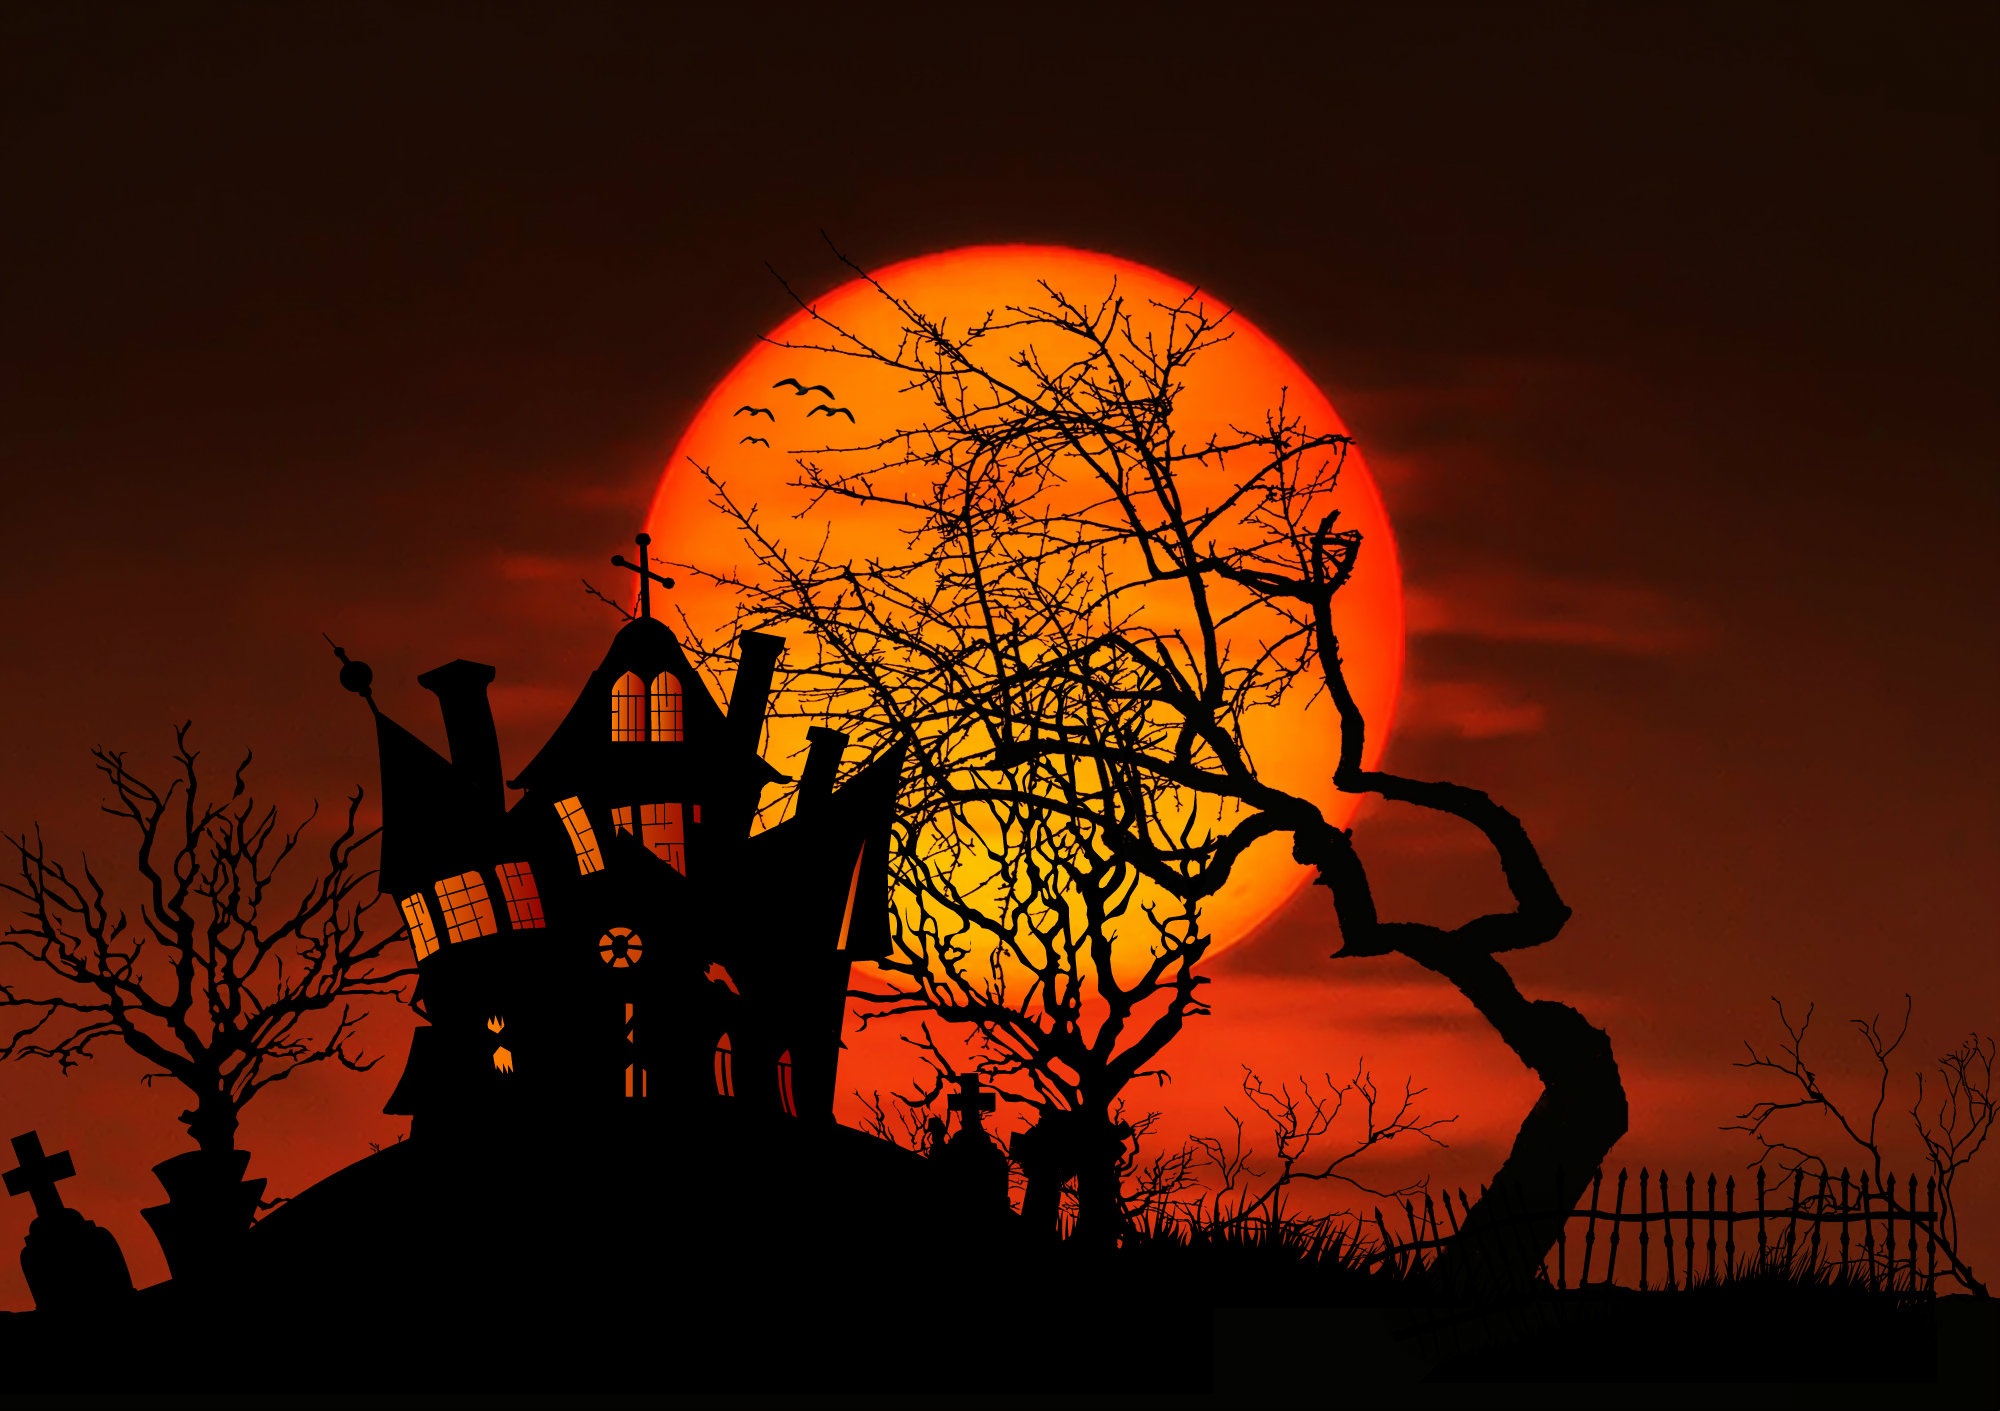 Фото дерево, силуэт, забор, небо, восход солнца, закат, ночь, рассвет, атмосфера, мистический, тьма, сумрак, вечер, сумерки, Хэллоуин - бесплатные картинки на Fonwall